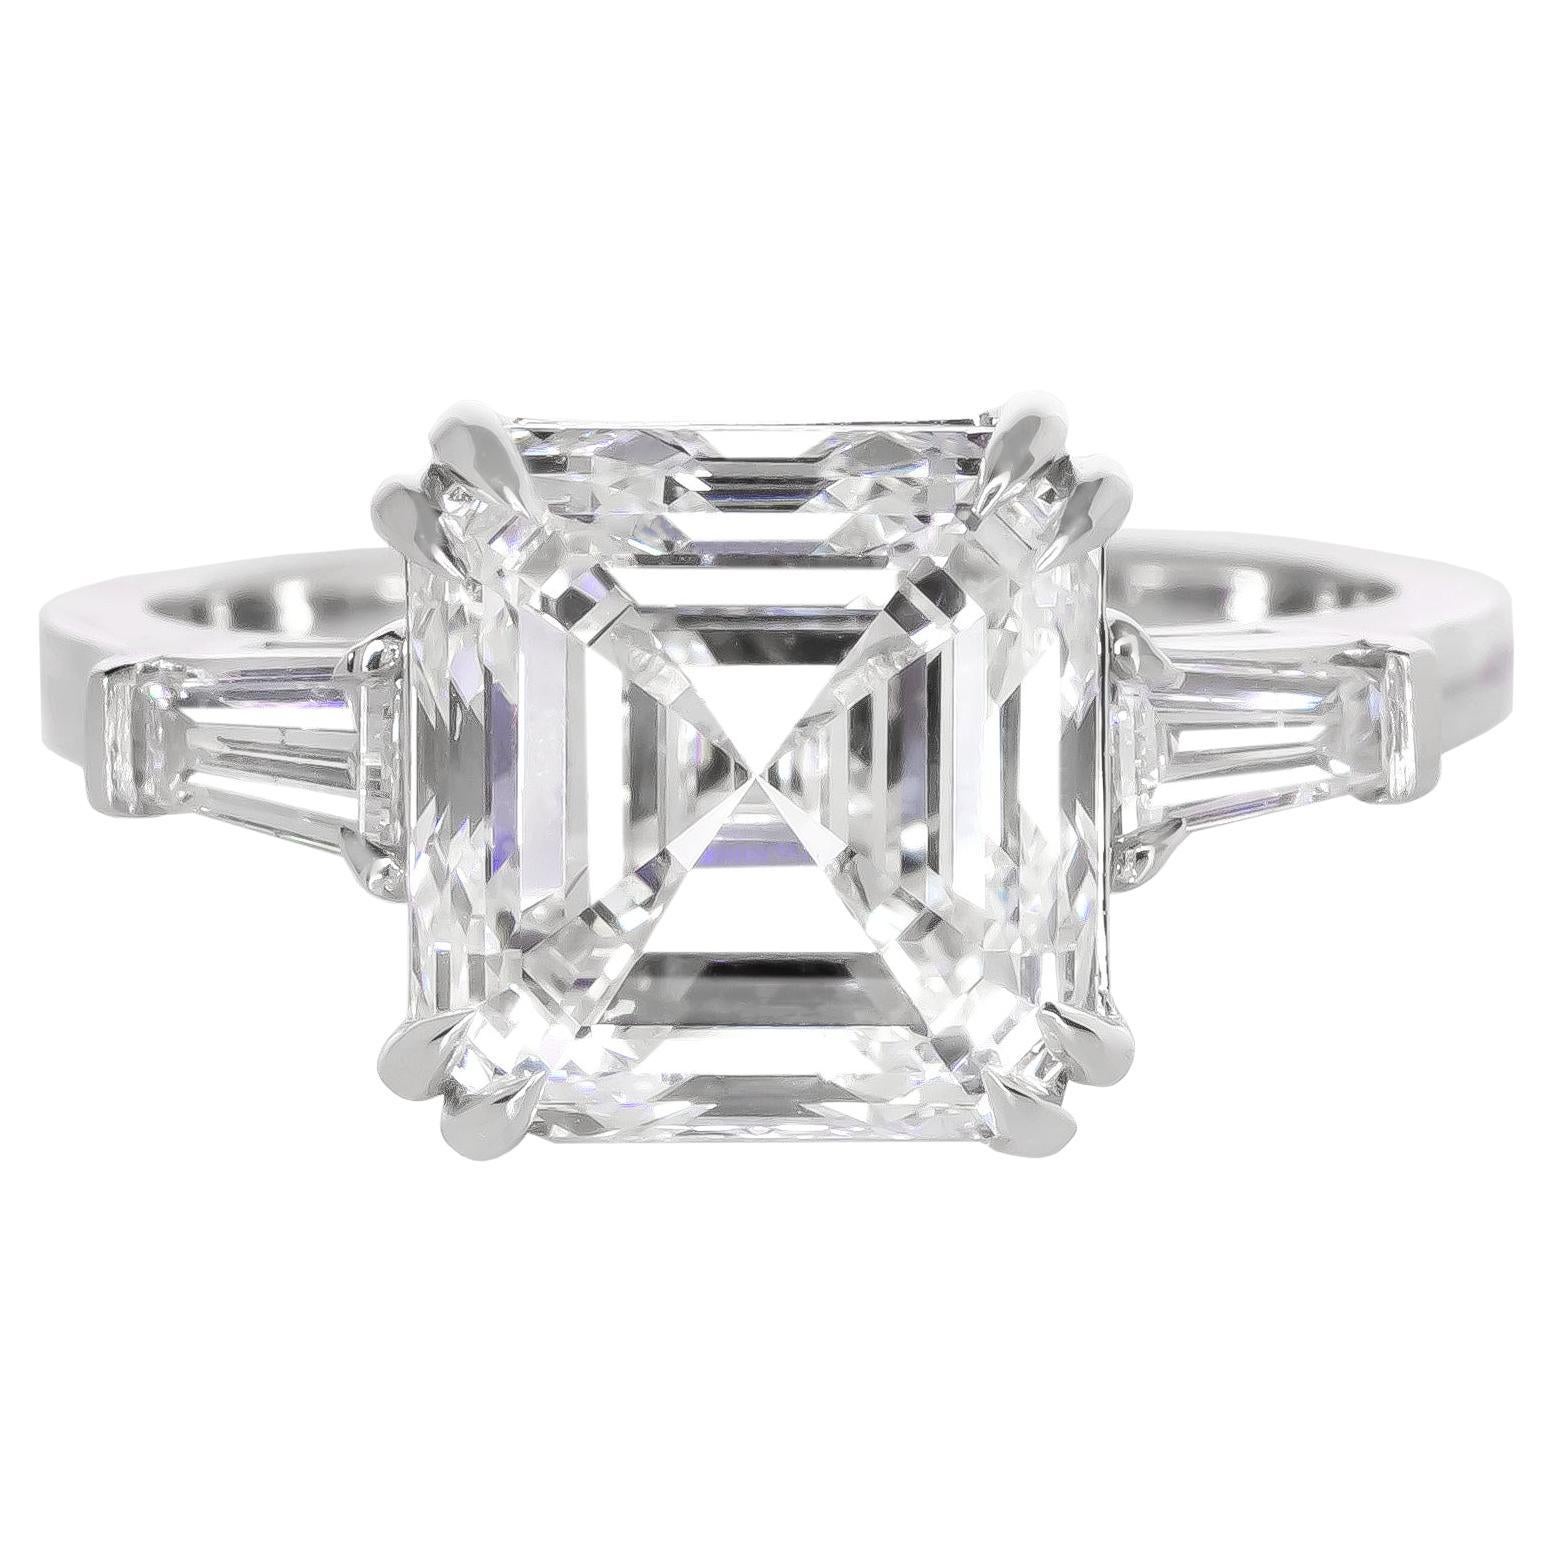 FLAWESS GIA Certified 5 Carat Asscher Cut Diamond Solitaire Ring